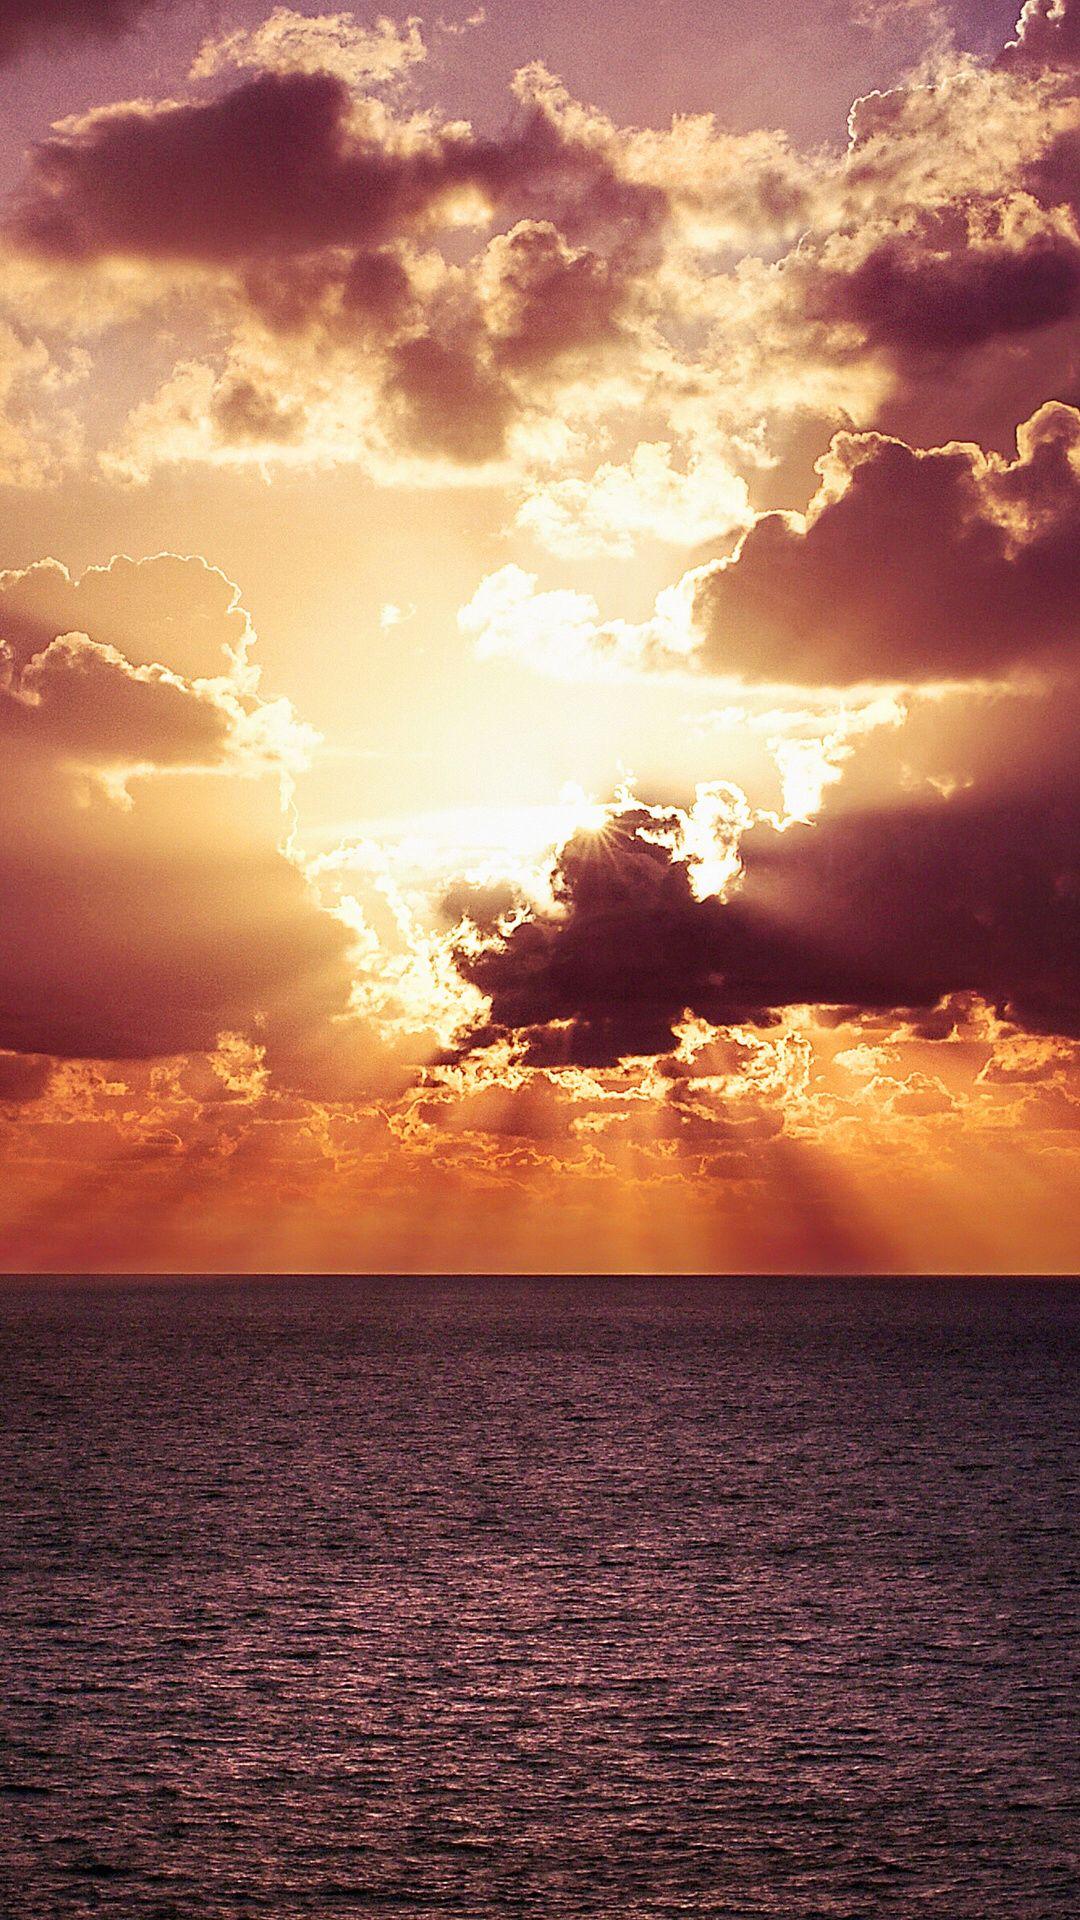 Rising Sun. Sunrise wallpaper, Clouds, iPhone wallpaper